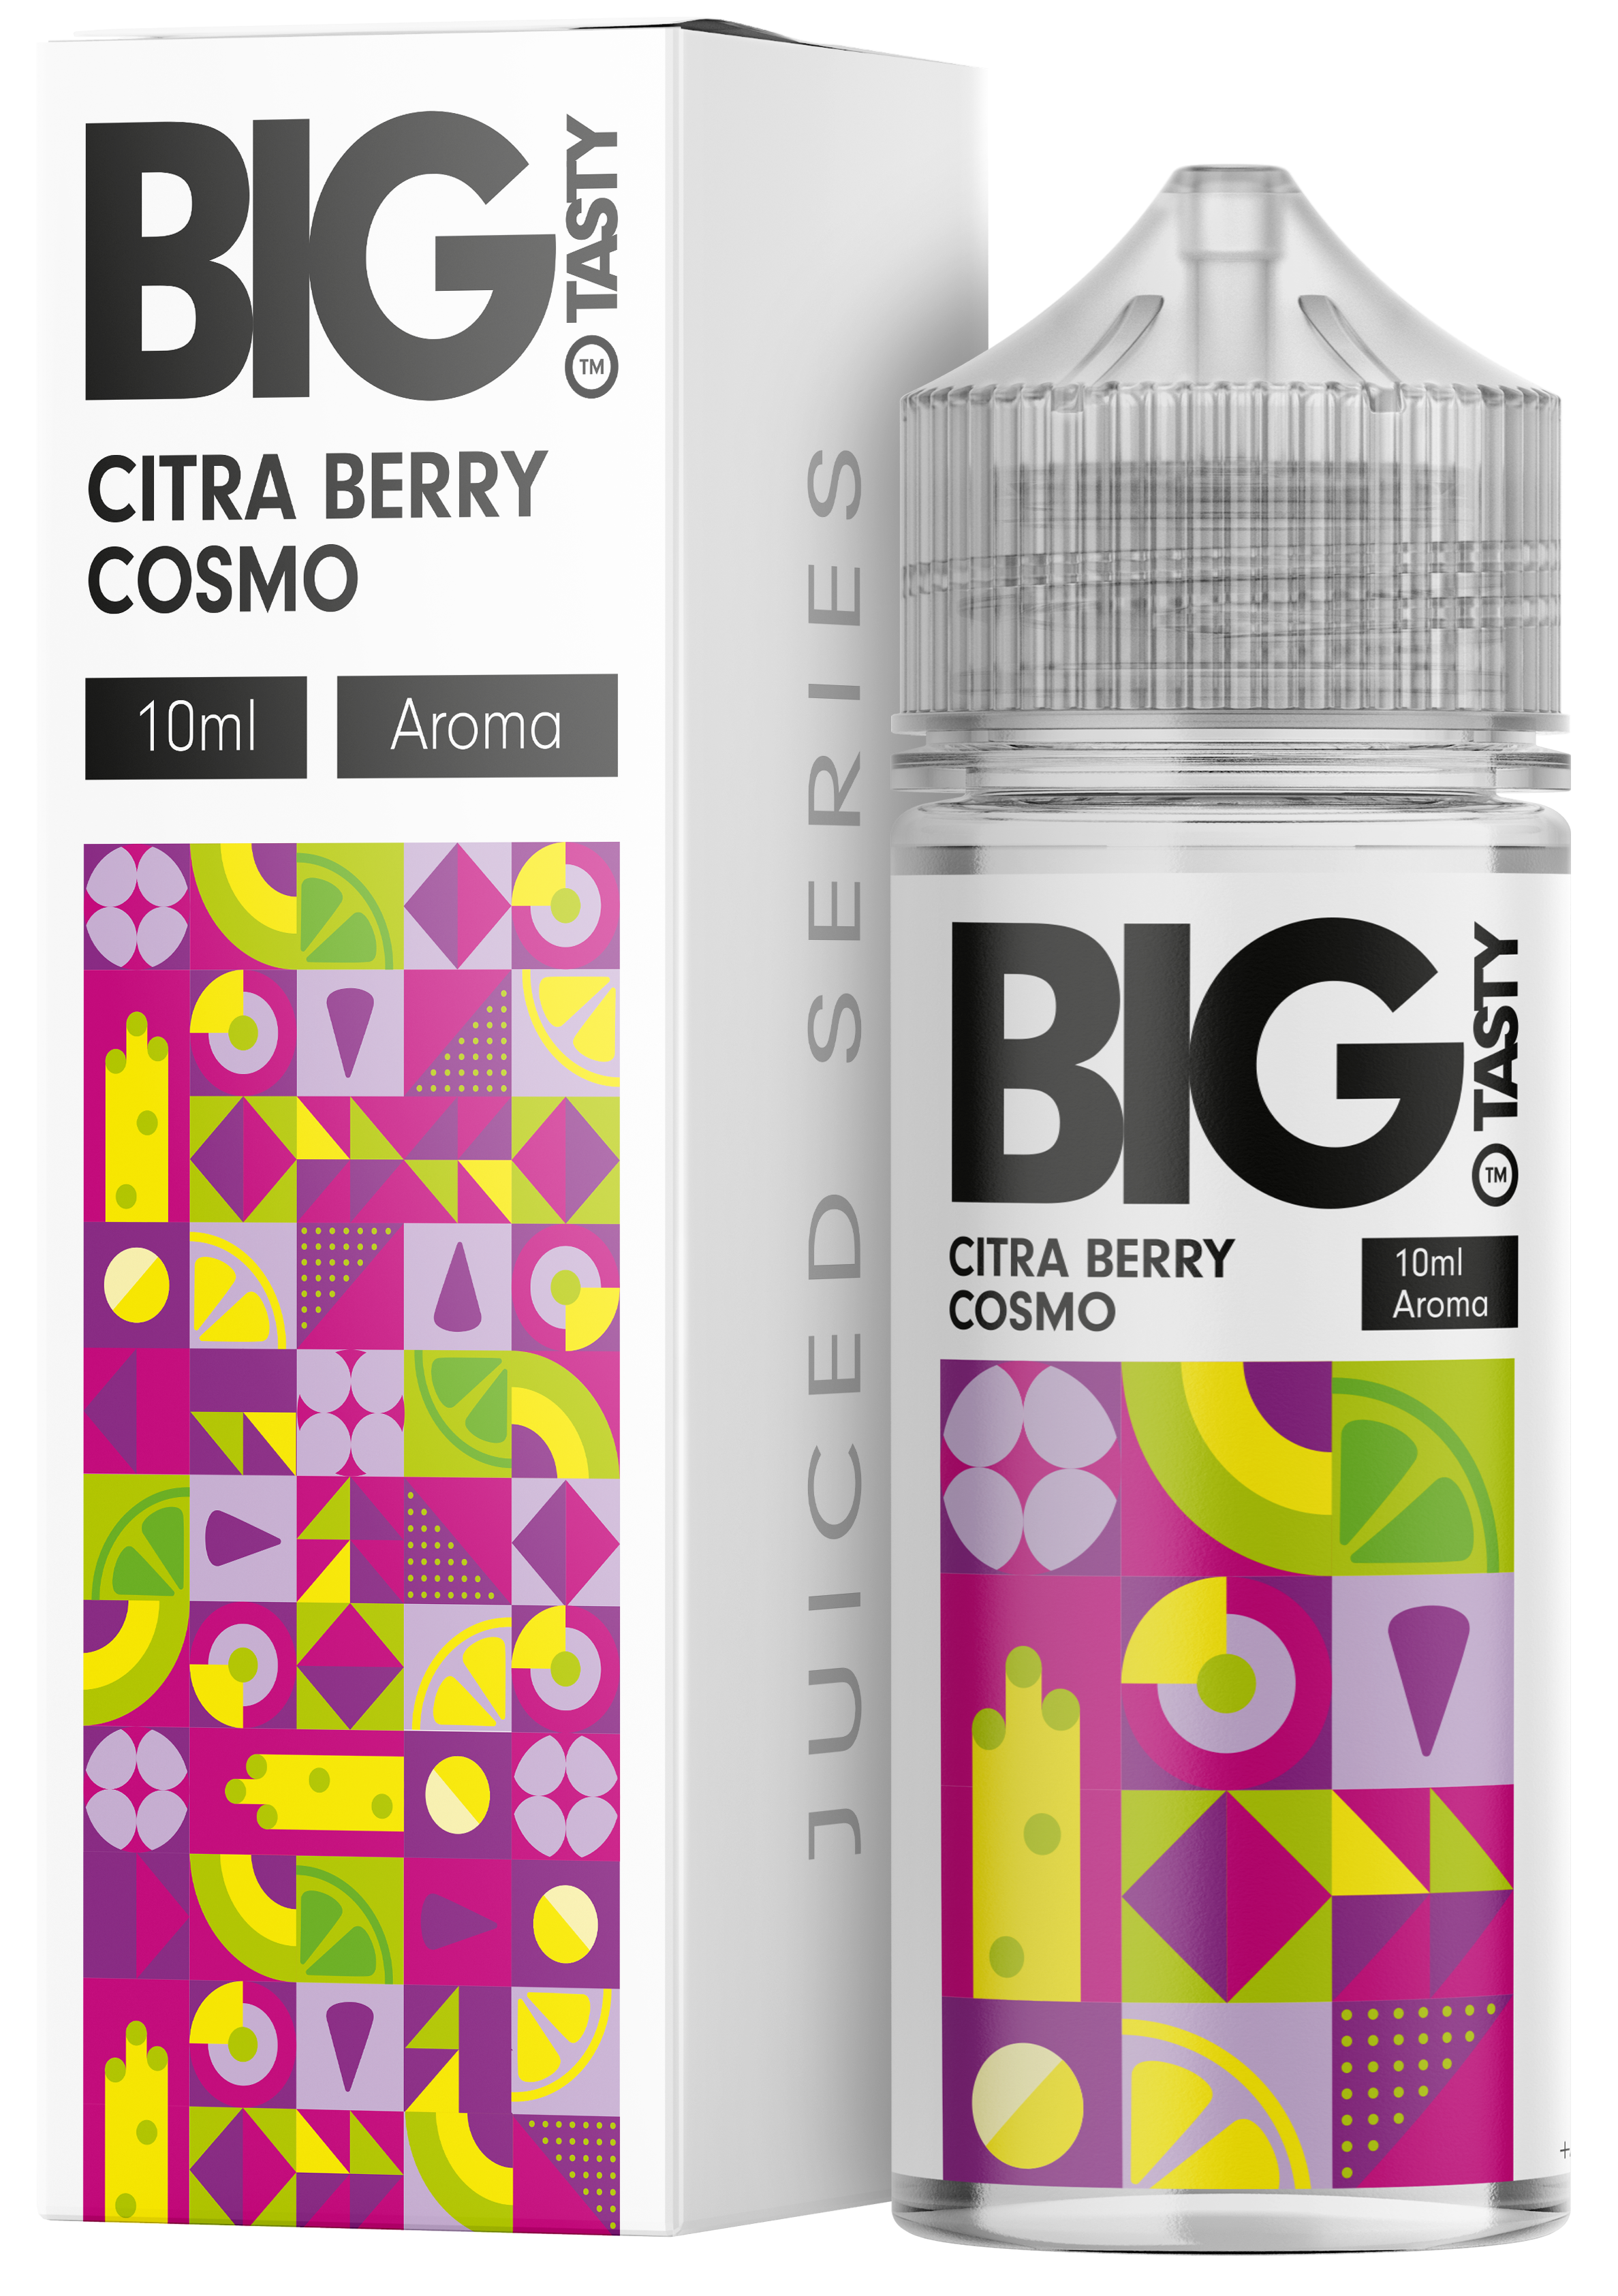 Big Tasty - Citra Berry Cosmo Aroma 10ml